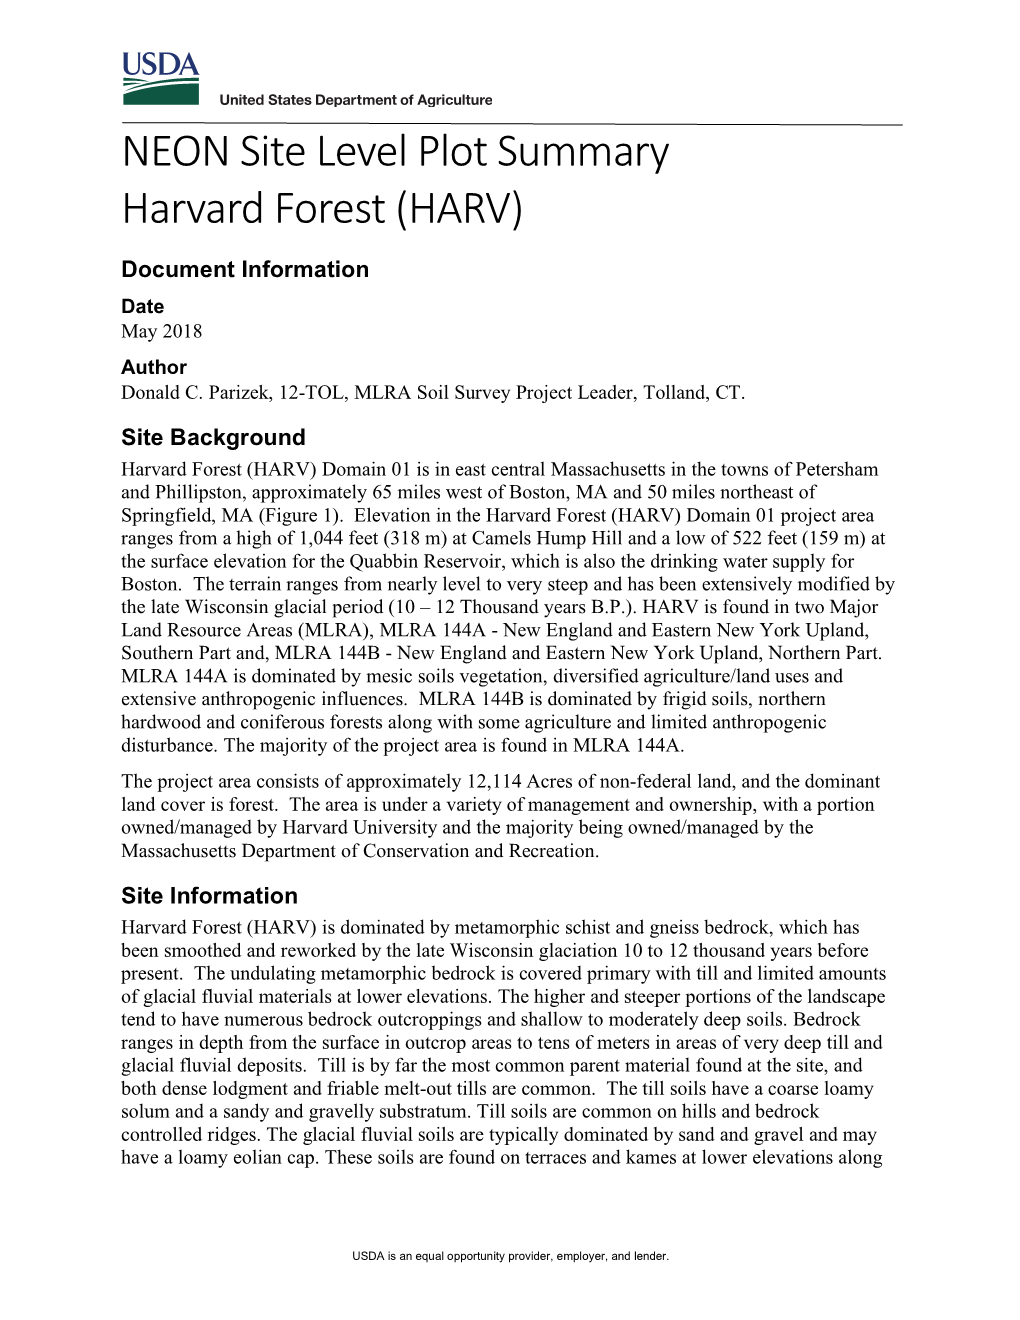 NEON Site Level Plot Summary Harvard Forest (HARV)